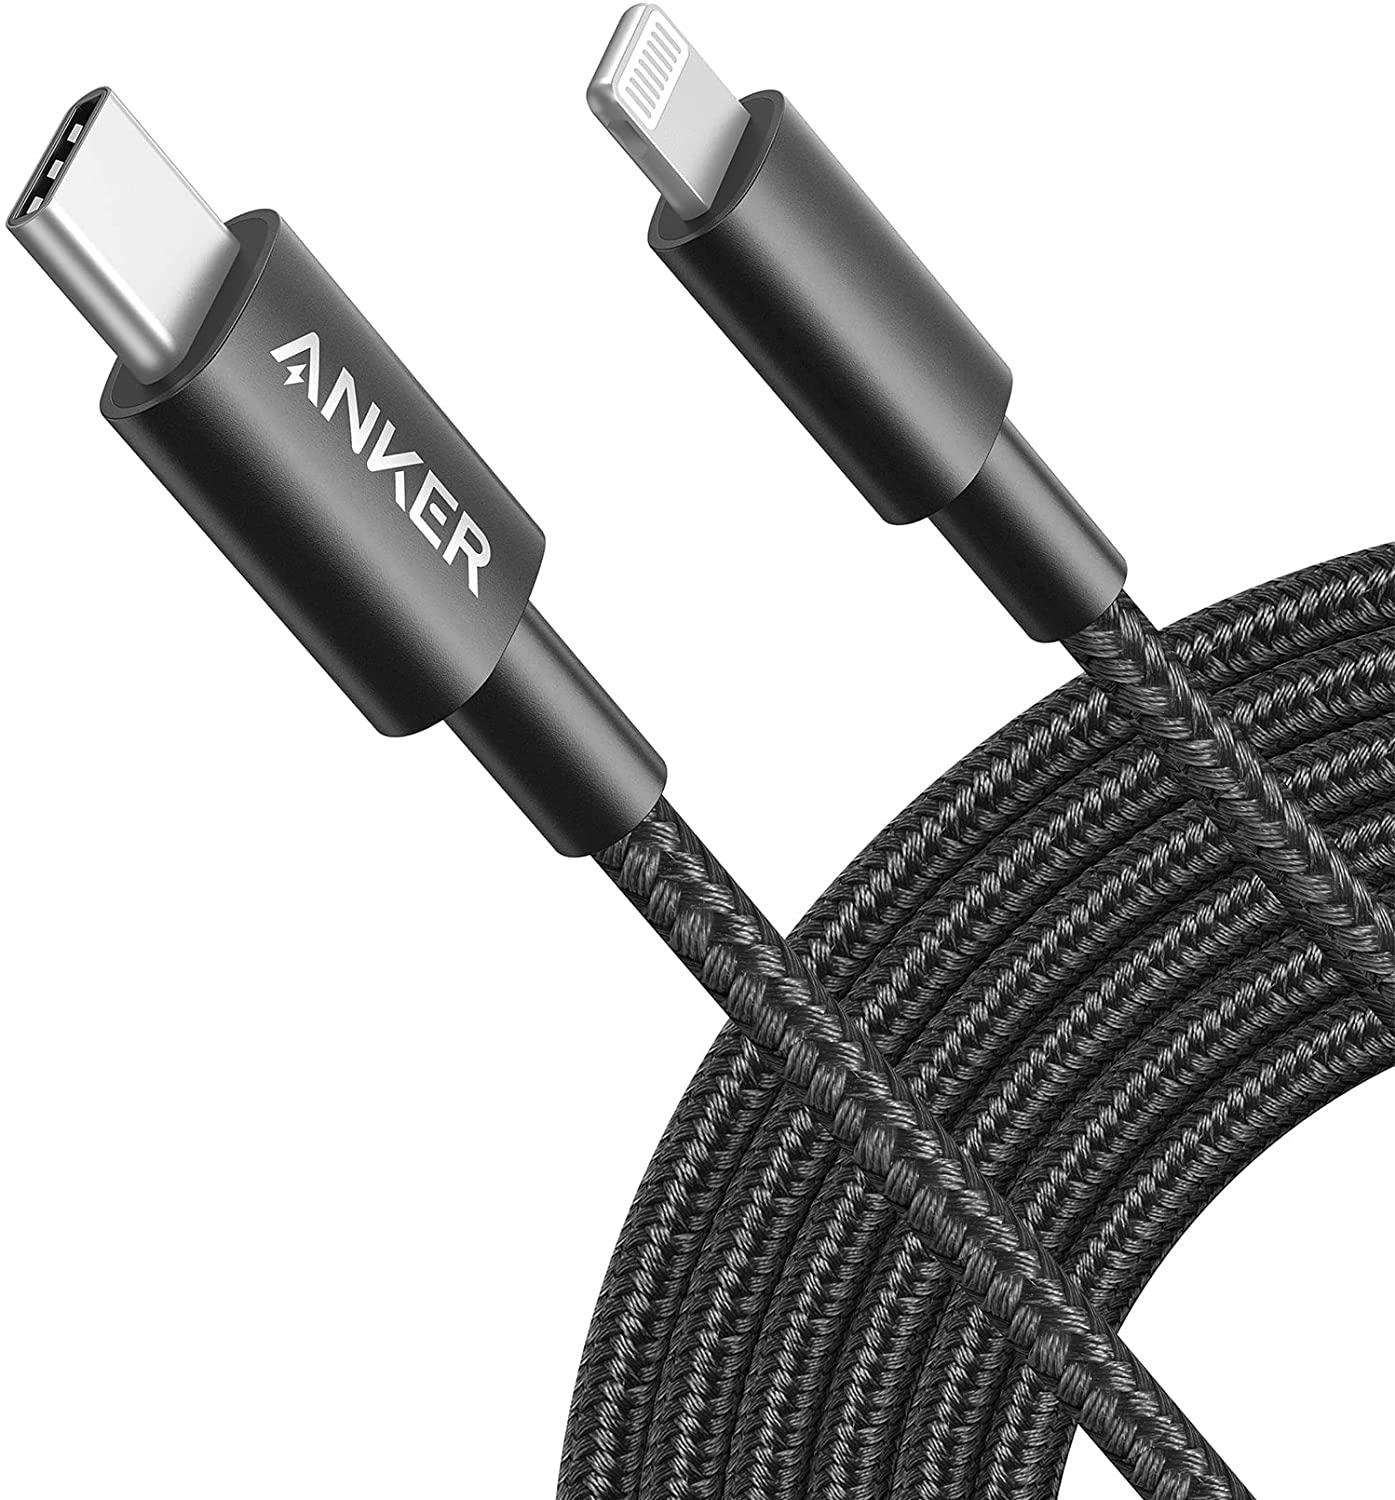 Anker <b>331</b> USB-C to Lightning Cable (6 / 10ft Nylon)